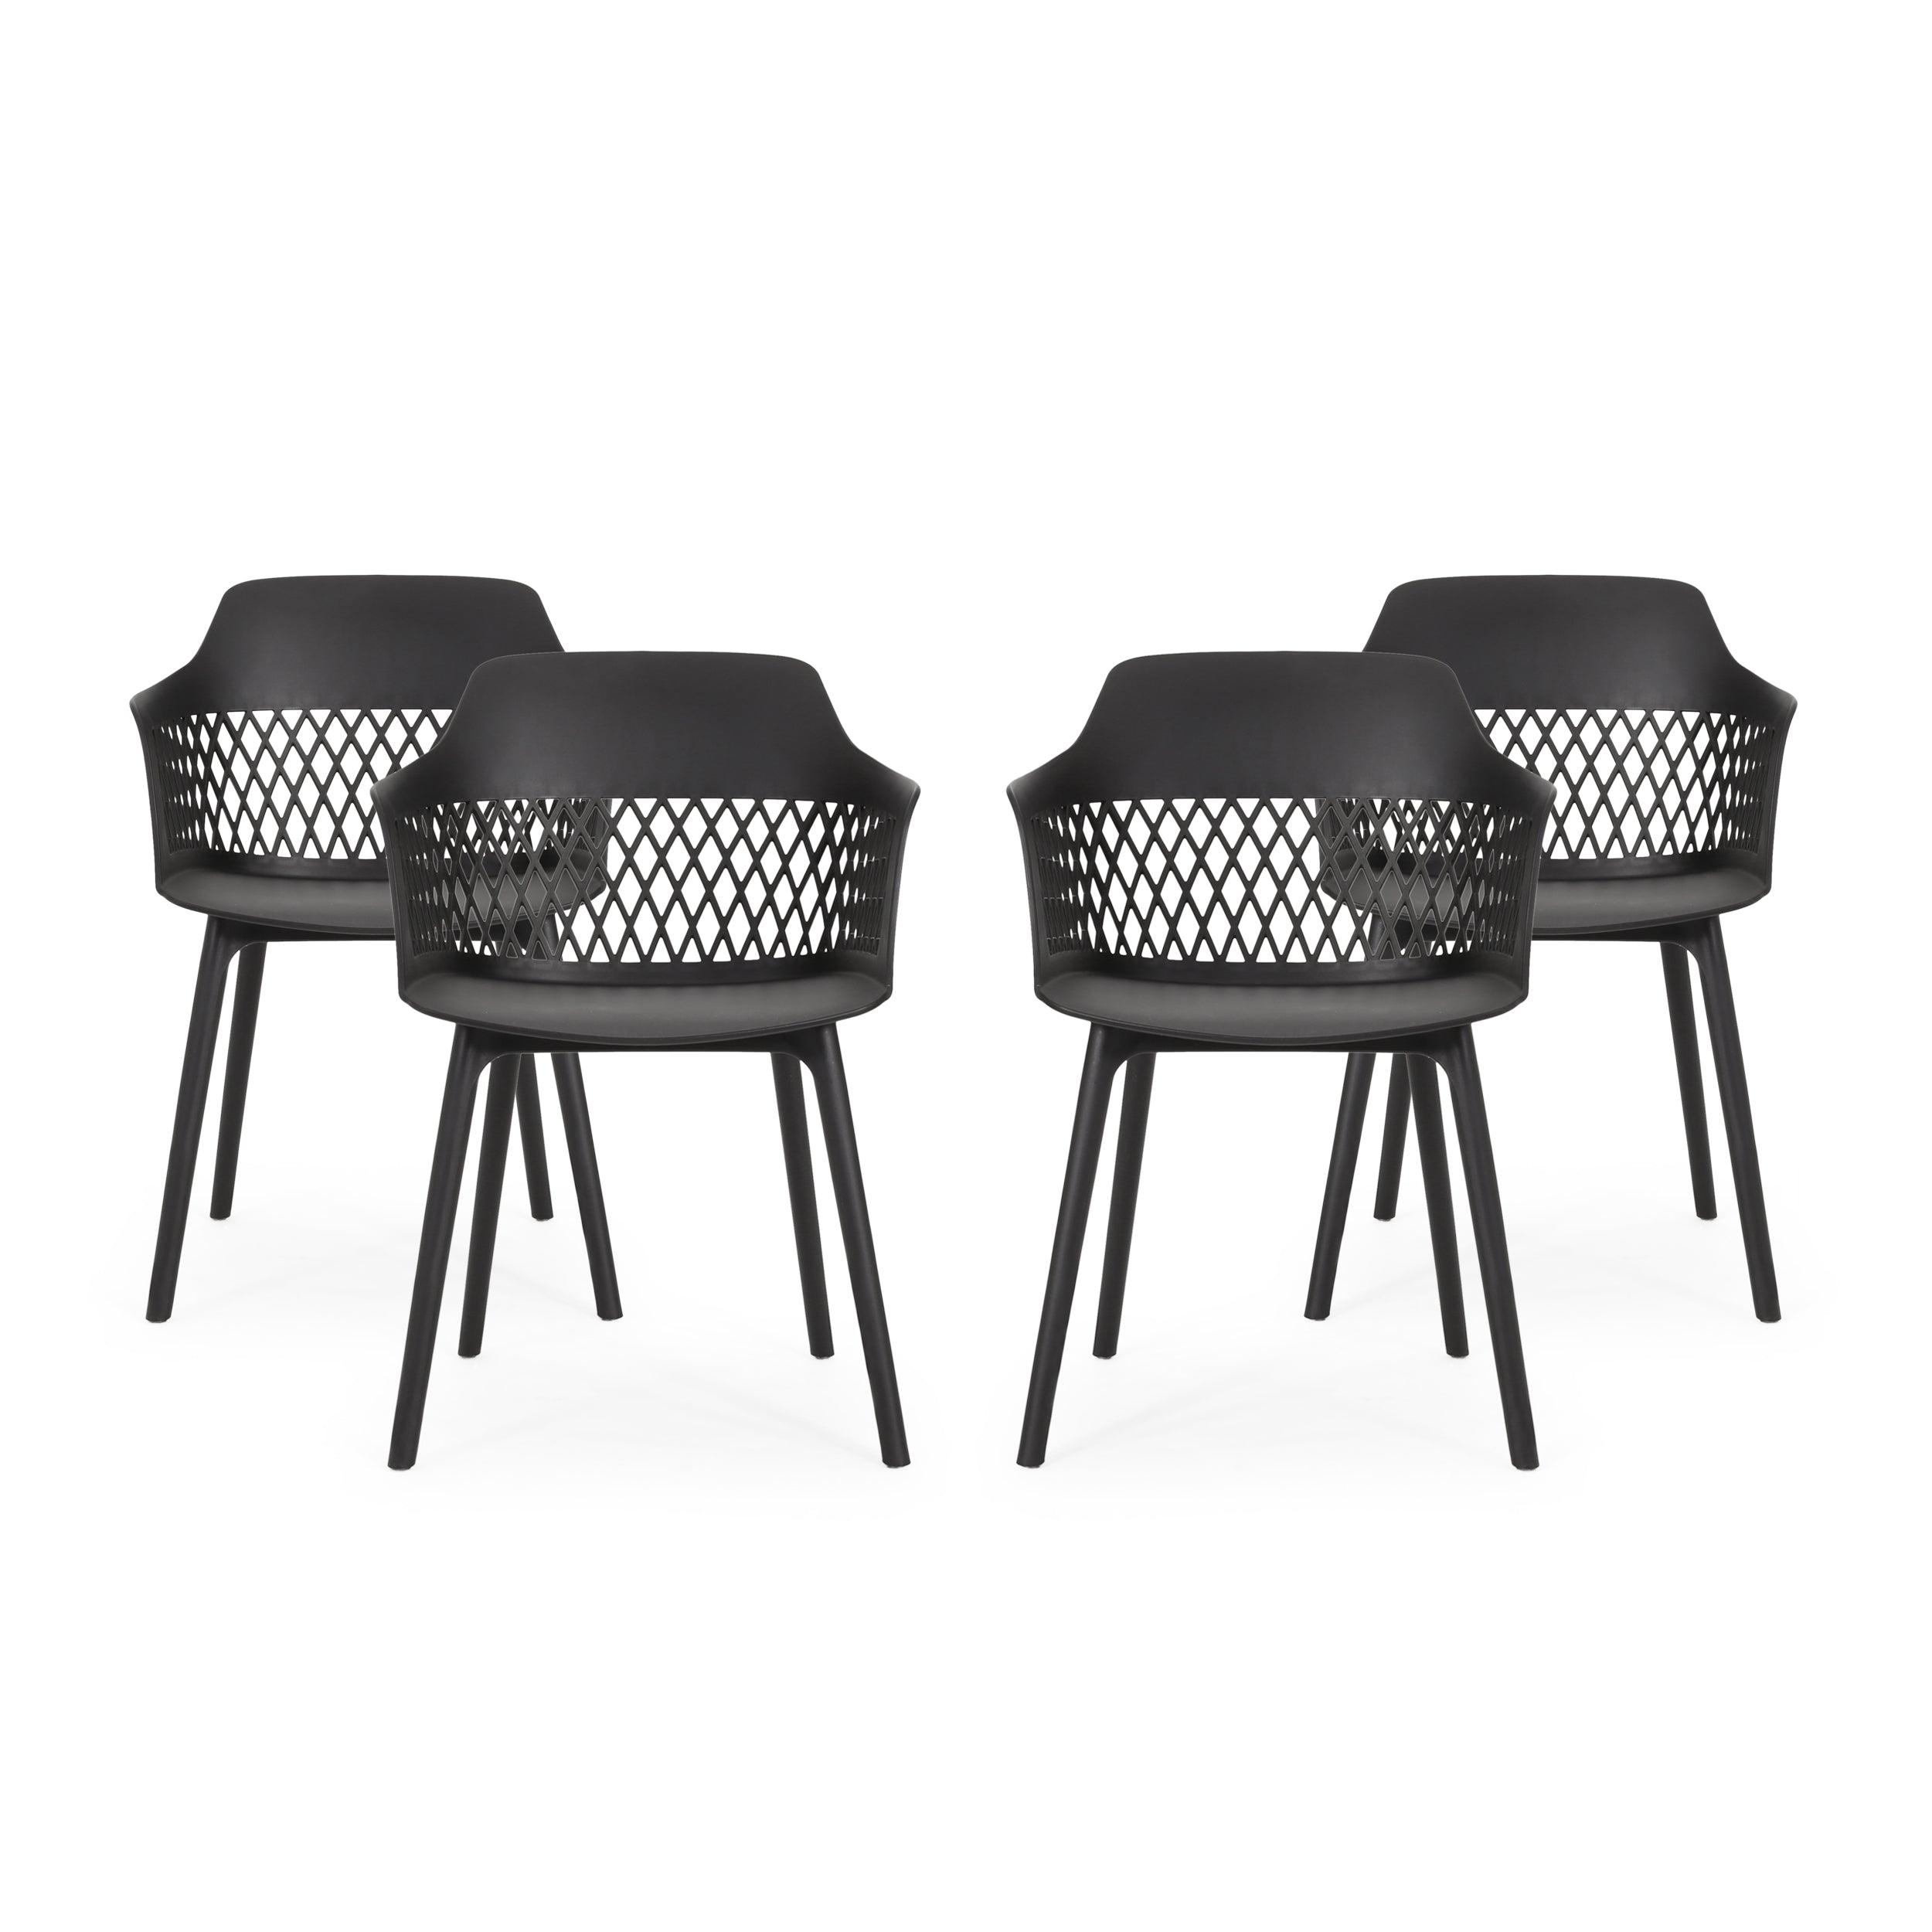 Airyanna Outdoor Modern Dining Chair Set of 4